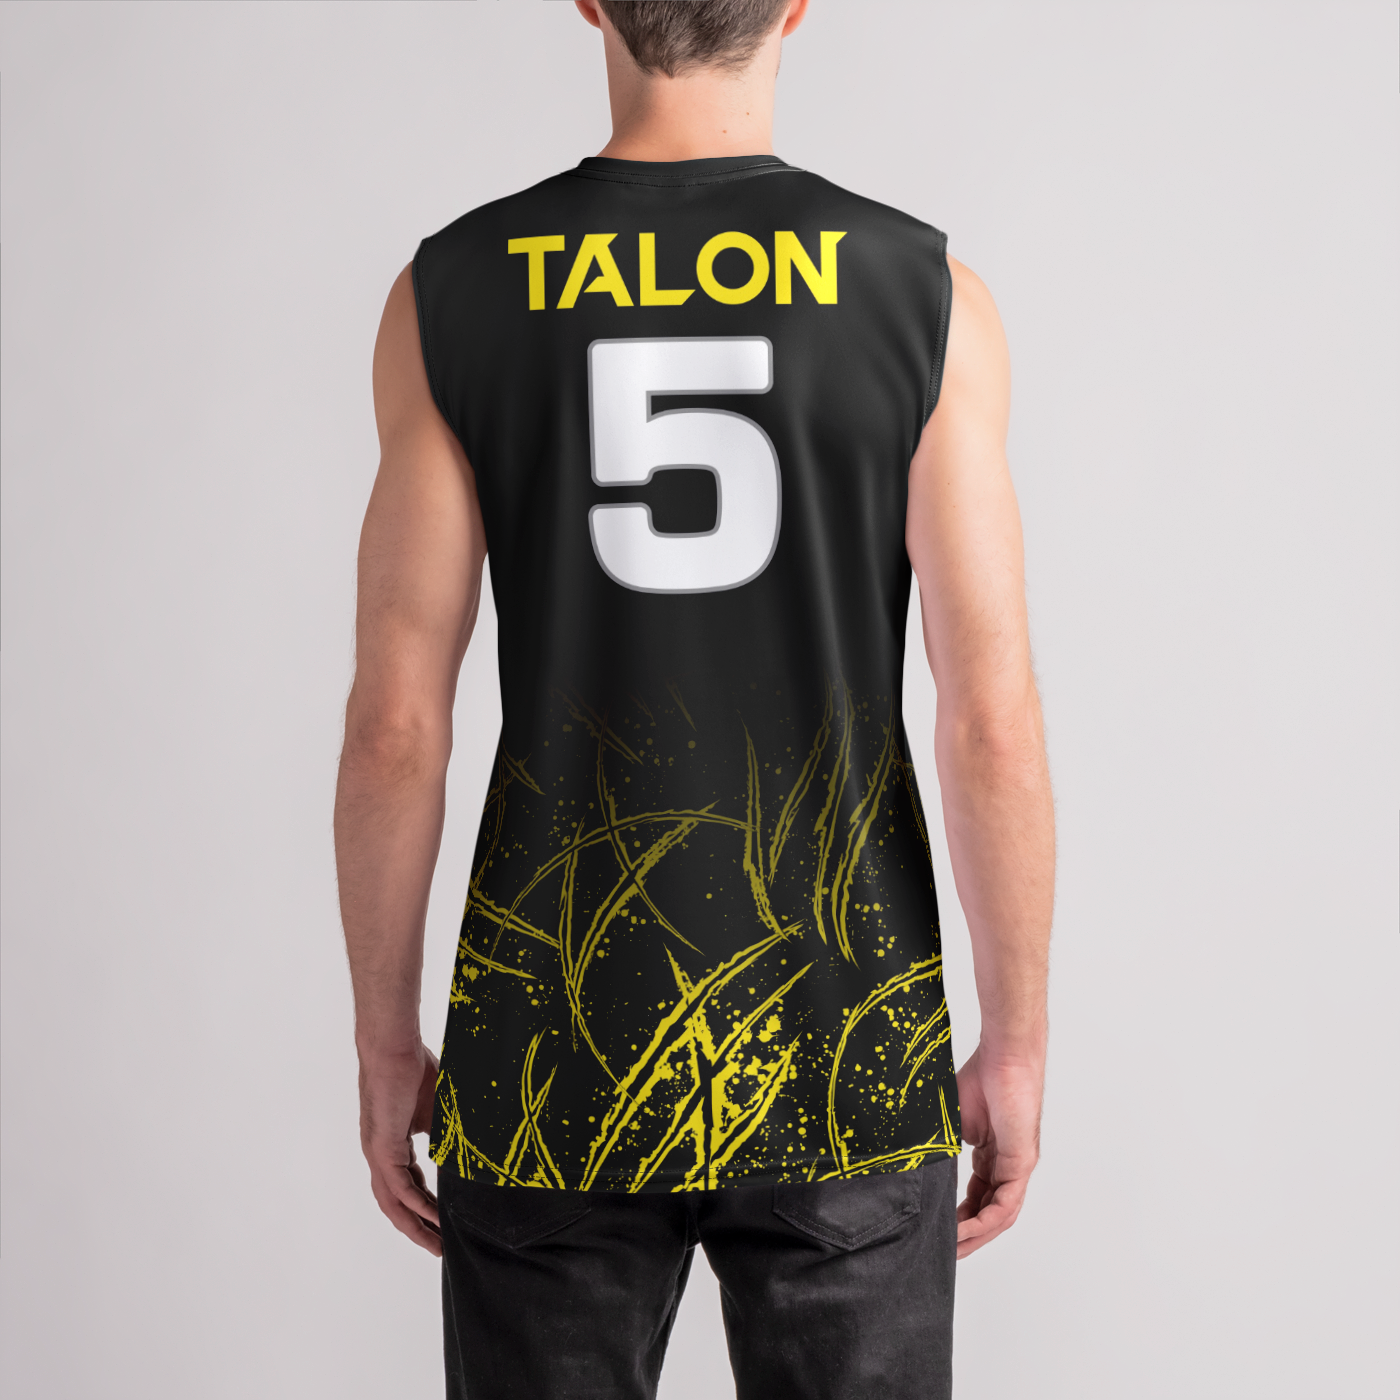 Talon Black Ombre Jersey